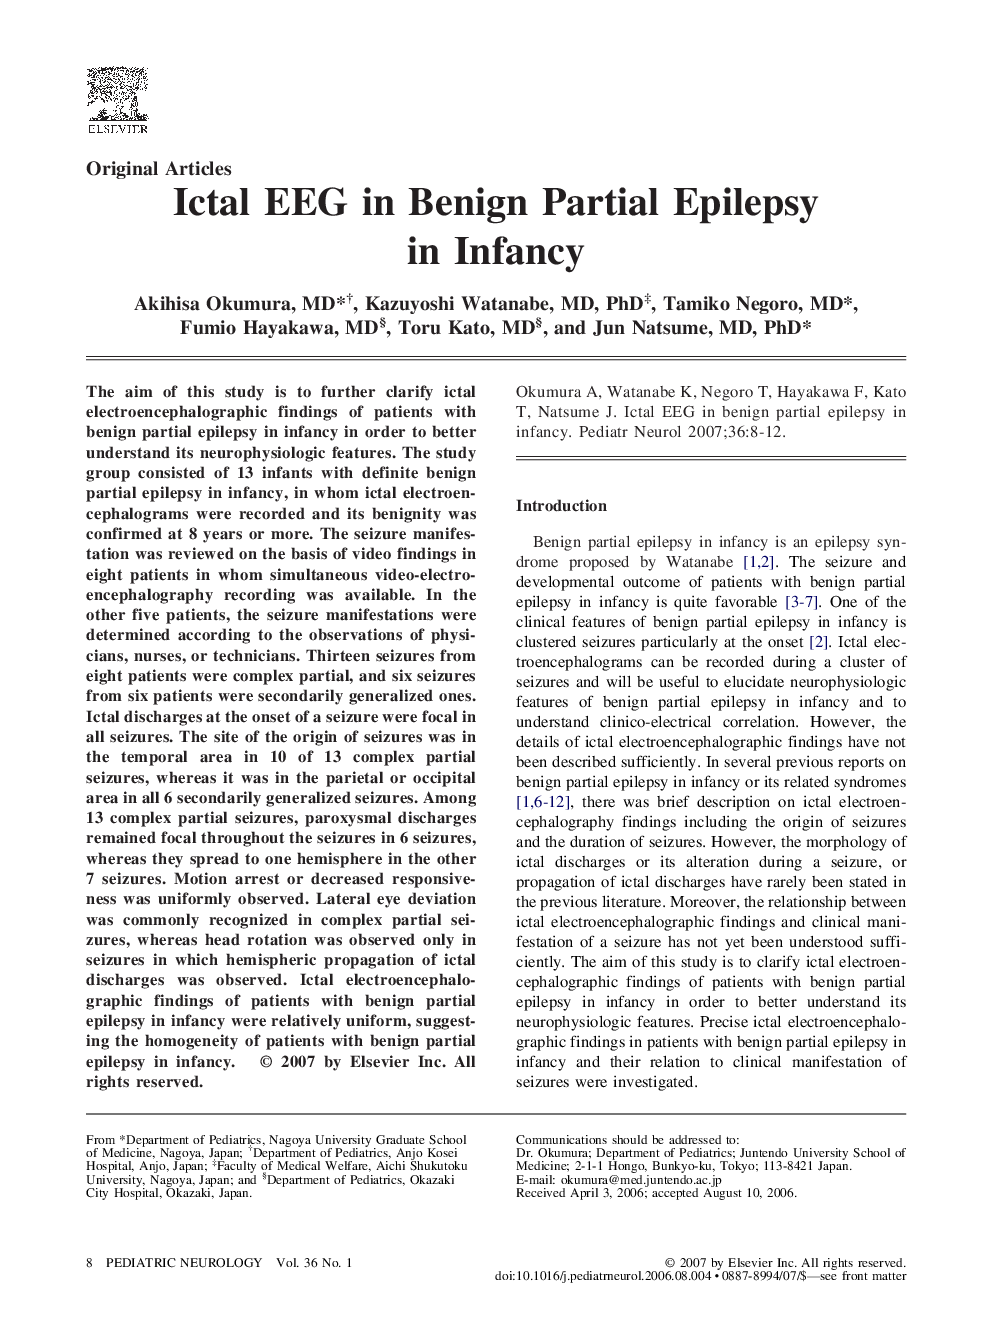 Ictal EEG in Benign Partial Epilepsy in Infancy